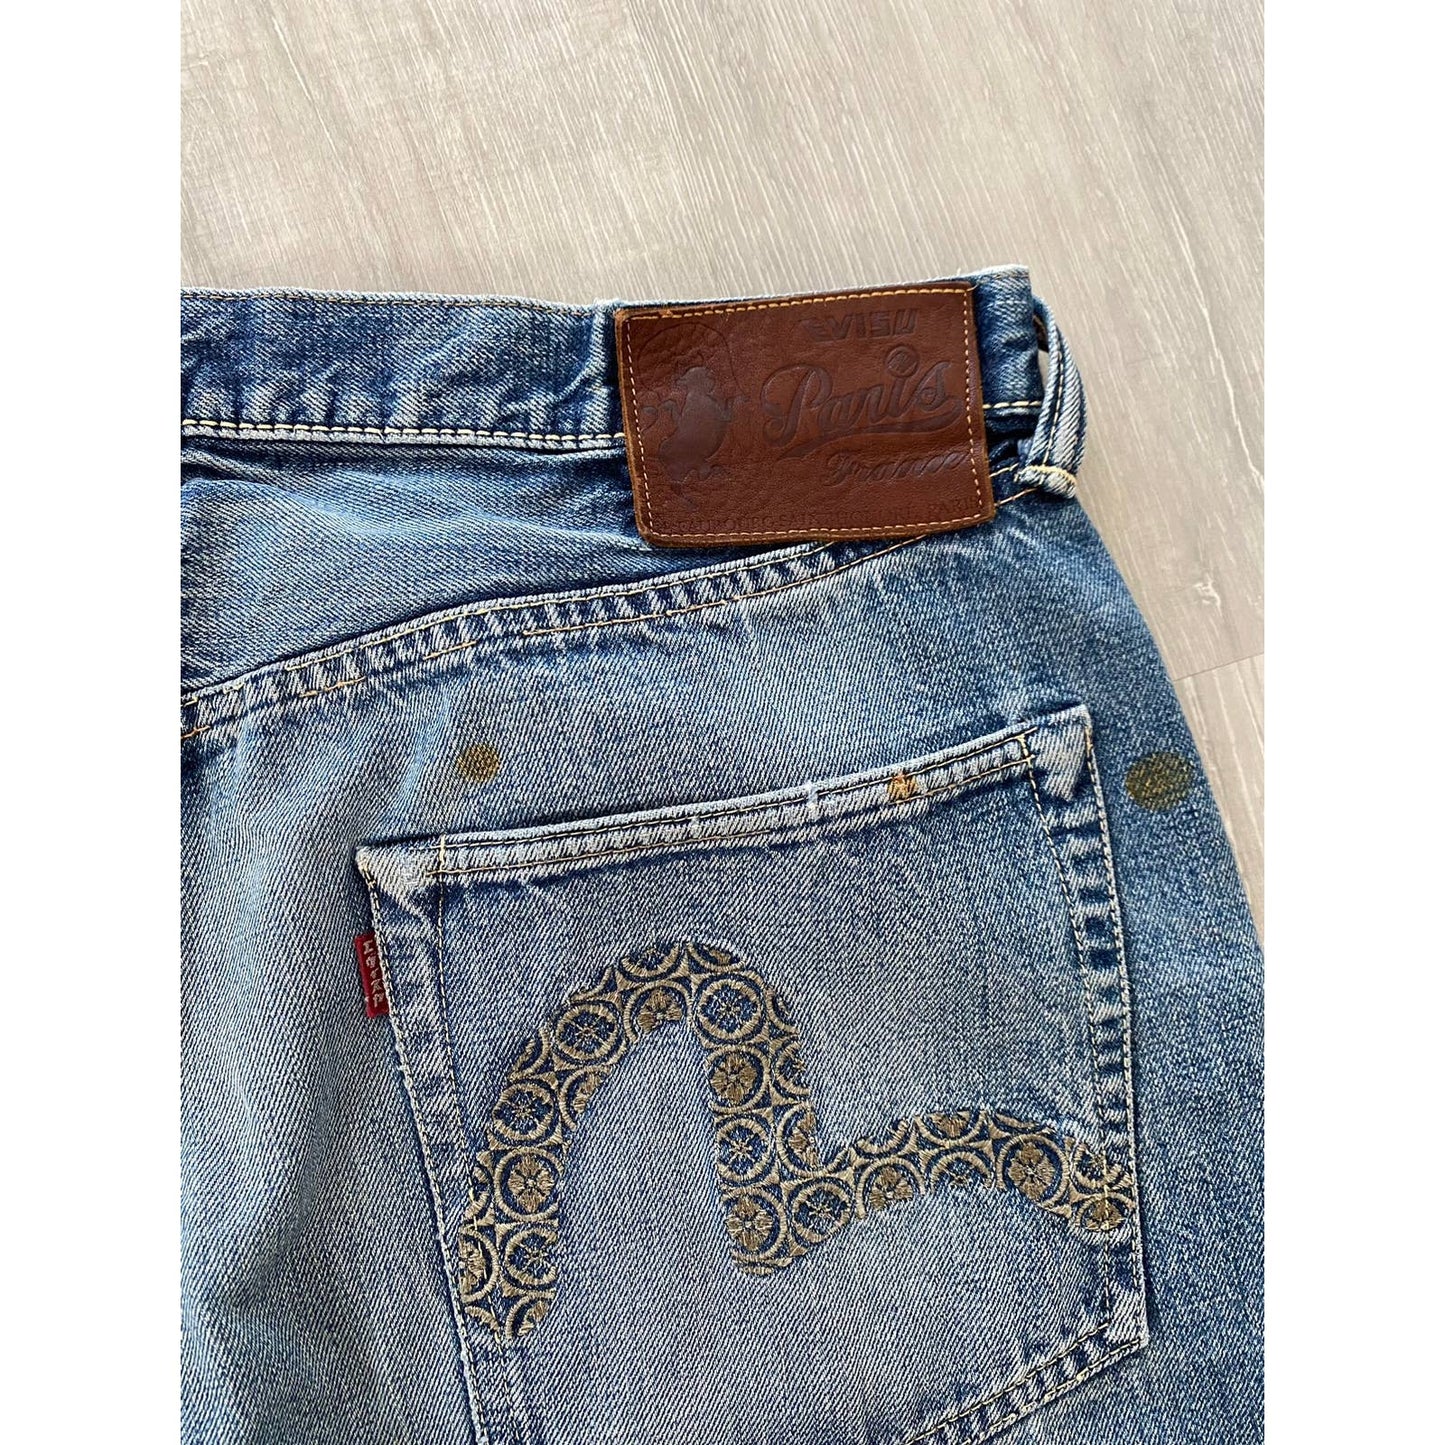 Evisu vintage front daicock jeans black big logo selvedge custom